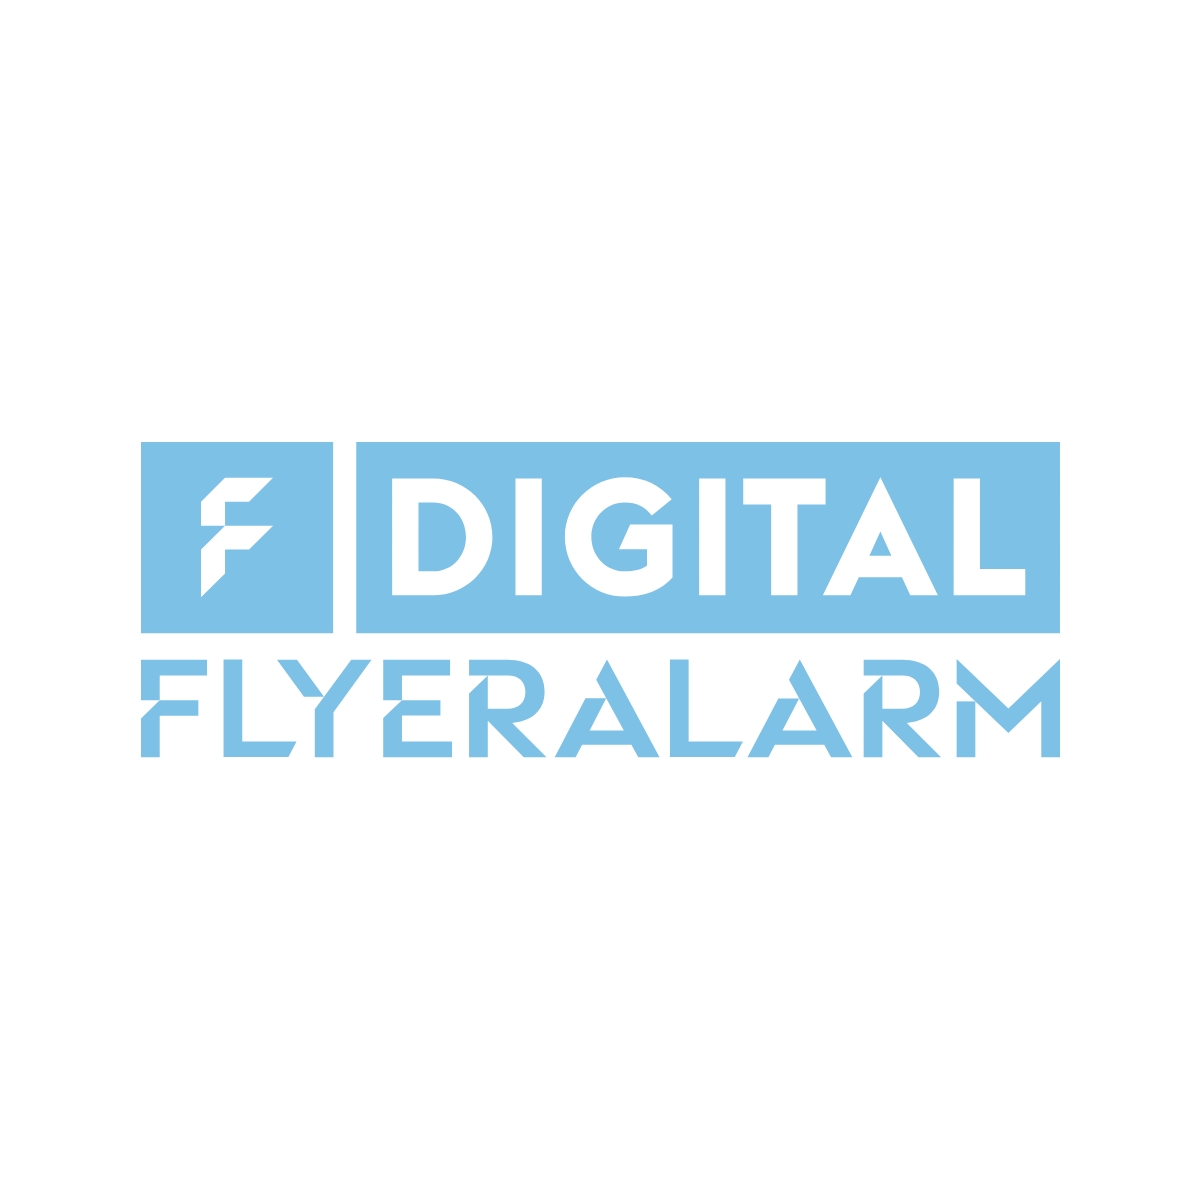 (c) Flyeralarm.digital